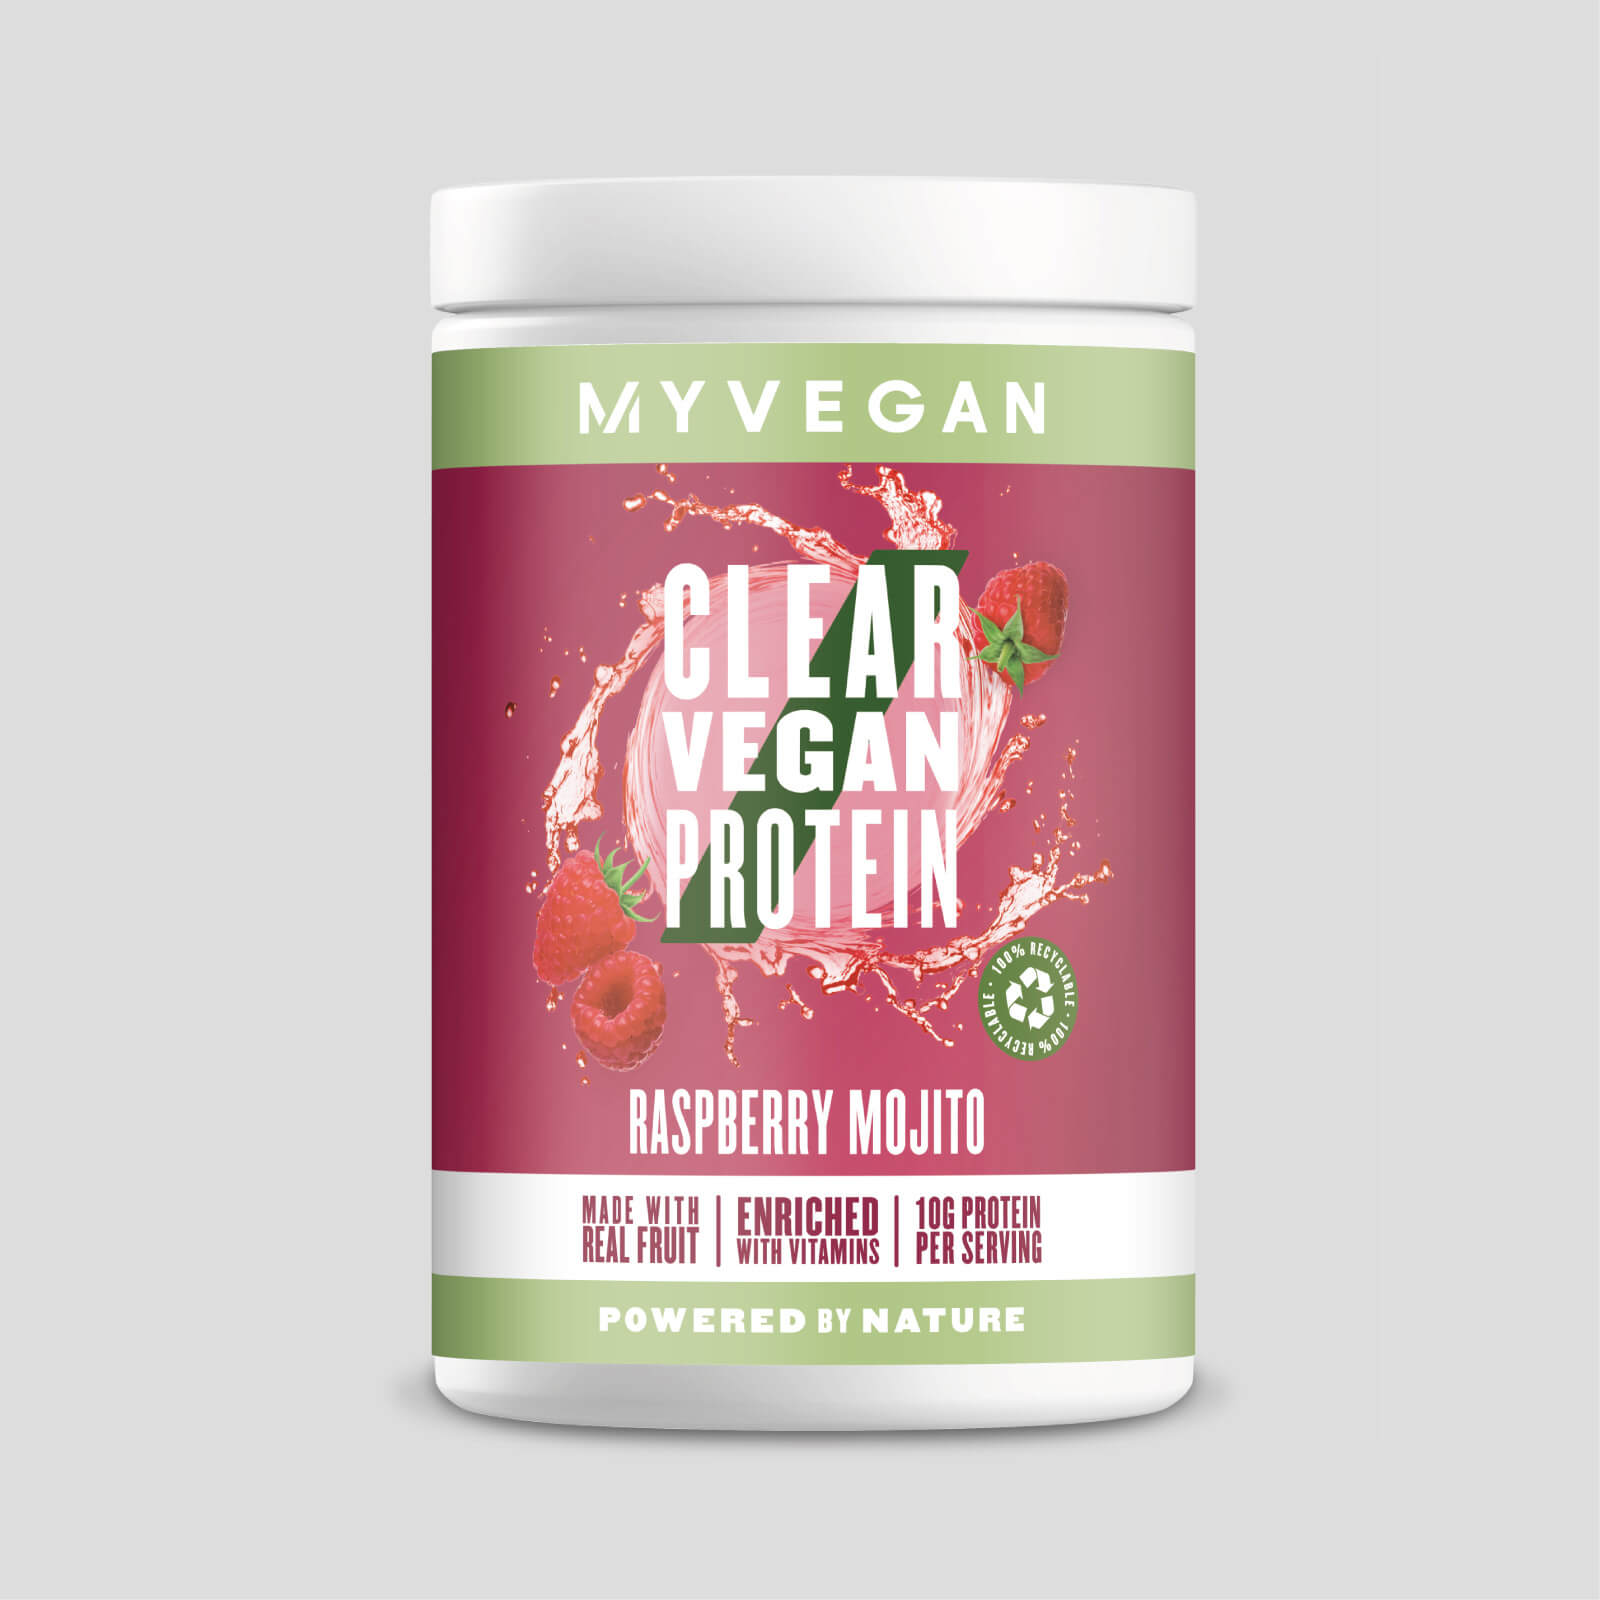 Clear Vegan Protein - 320g - Raspberry Mojito